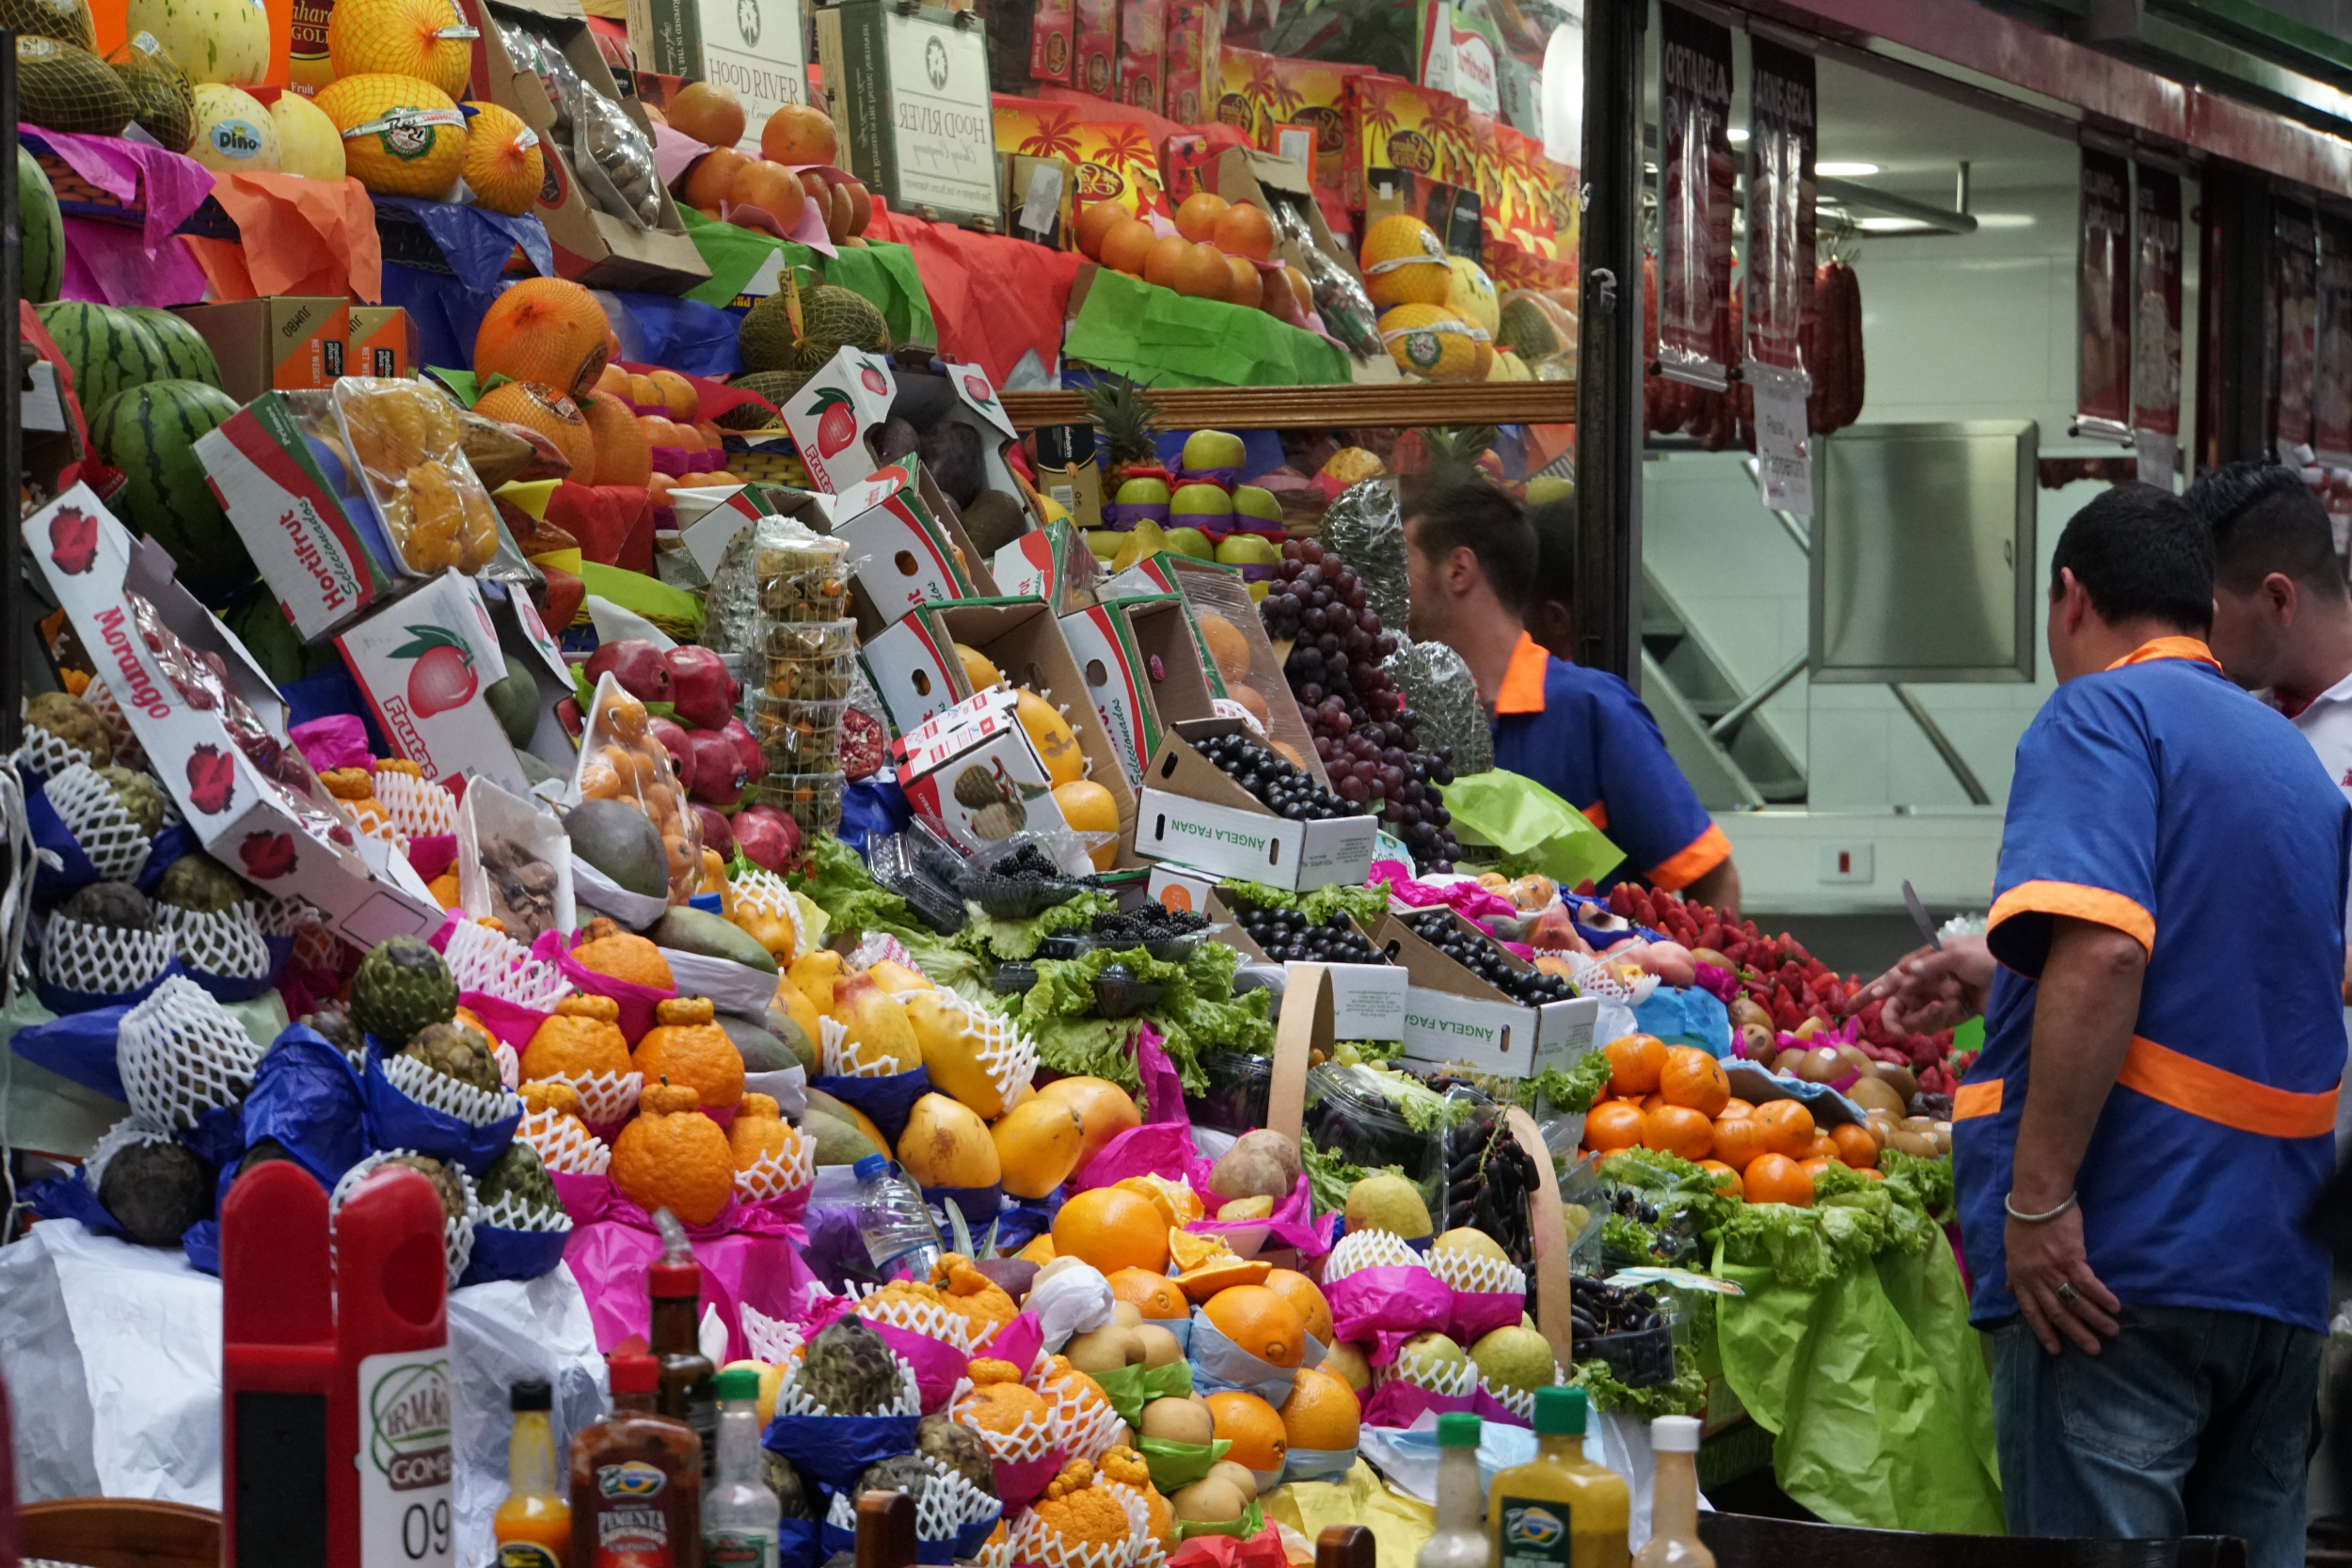 45. Fruit market, Sao Paulo